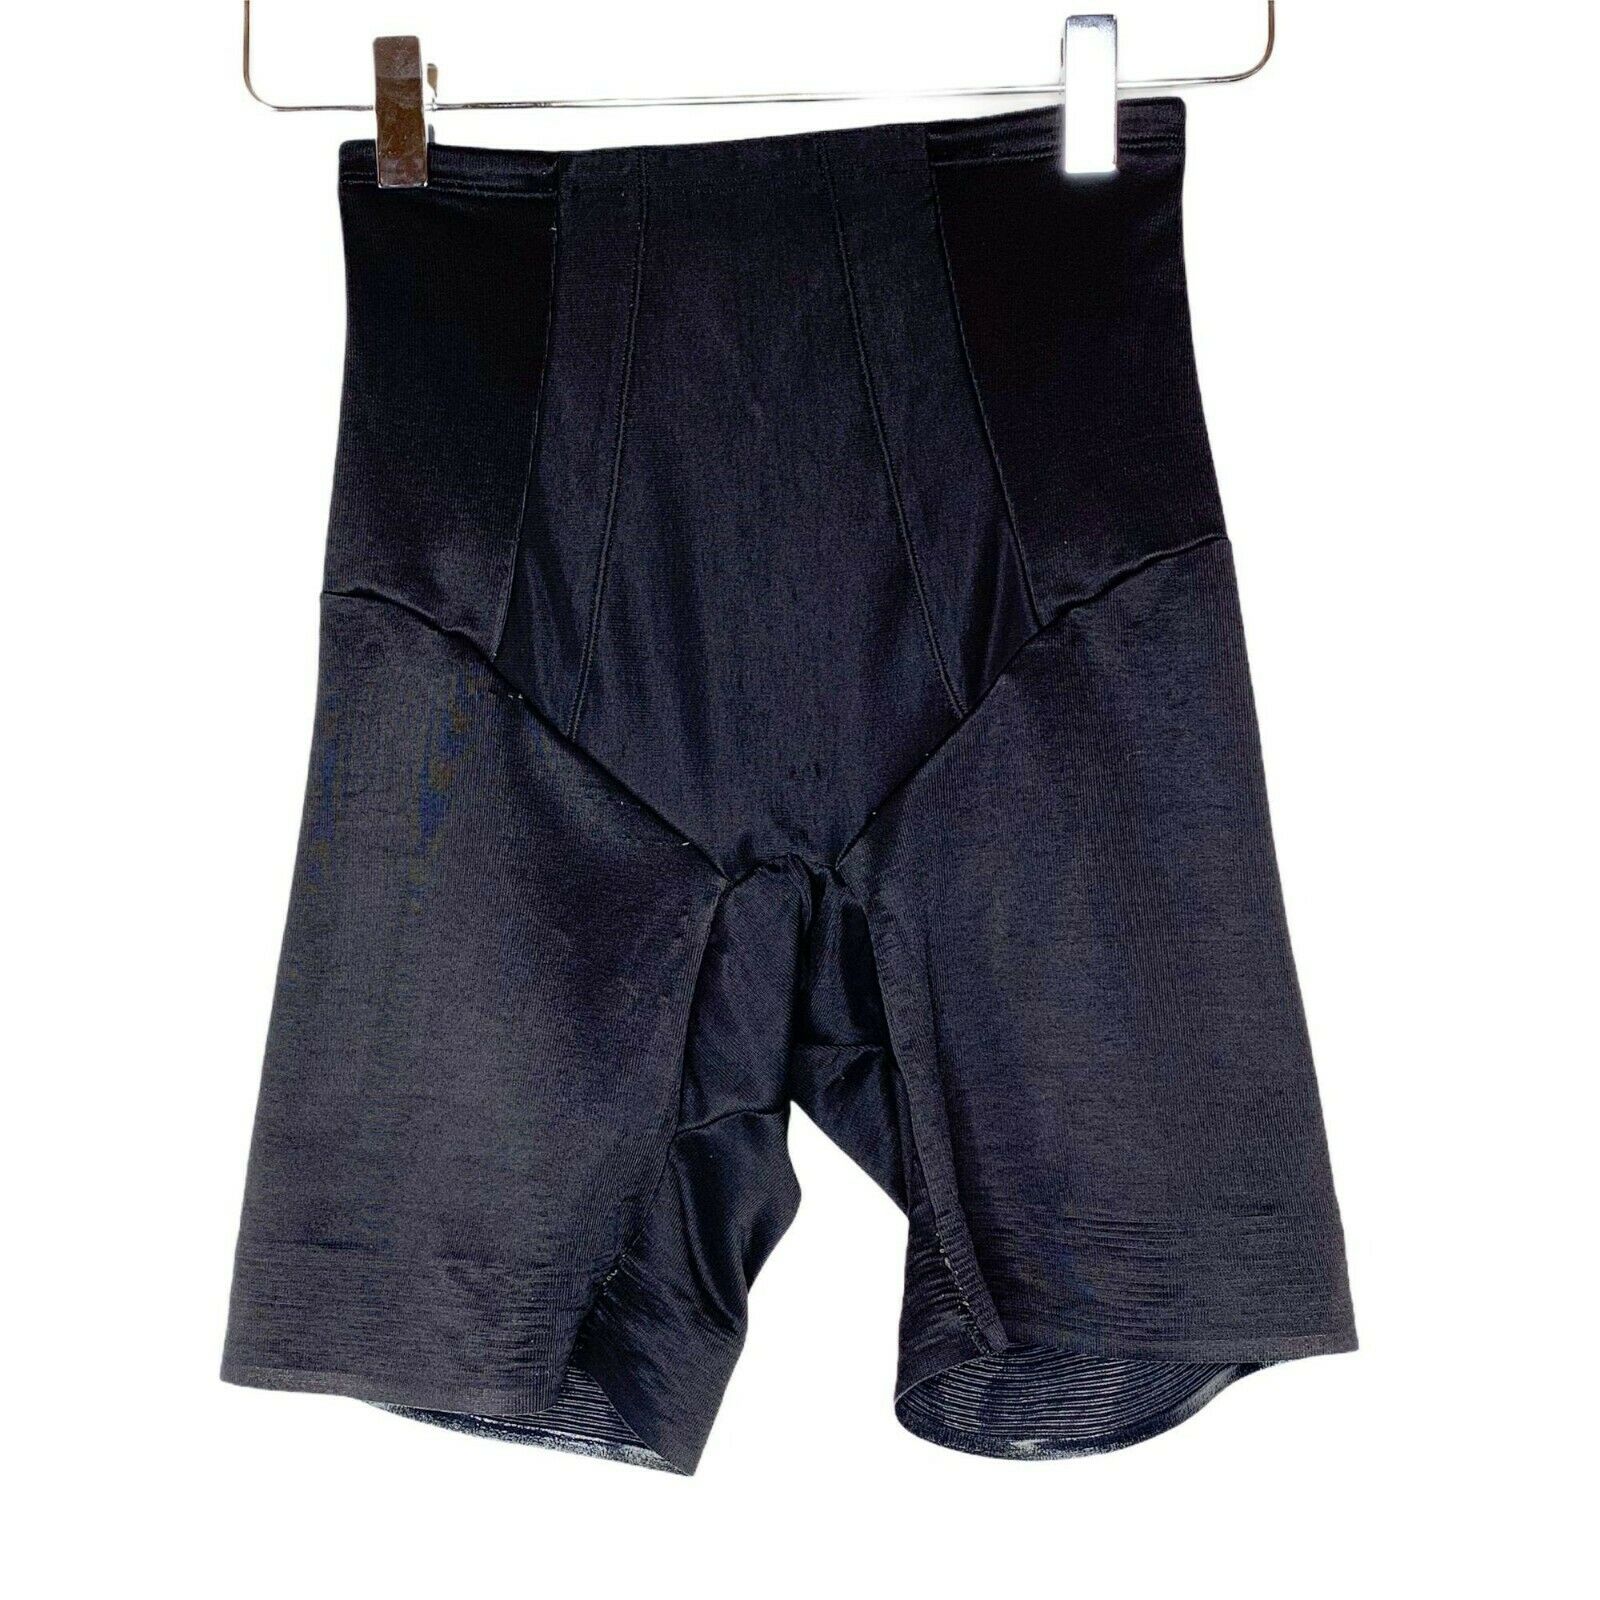 Miraclesuit Shapewear Tummy-control Boy Shorts Sz L